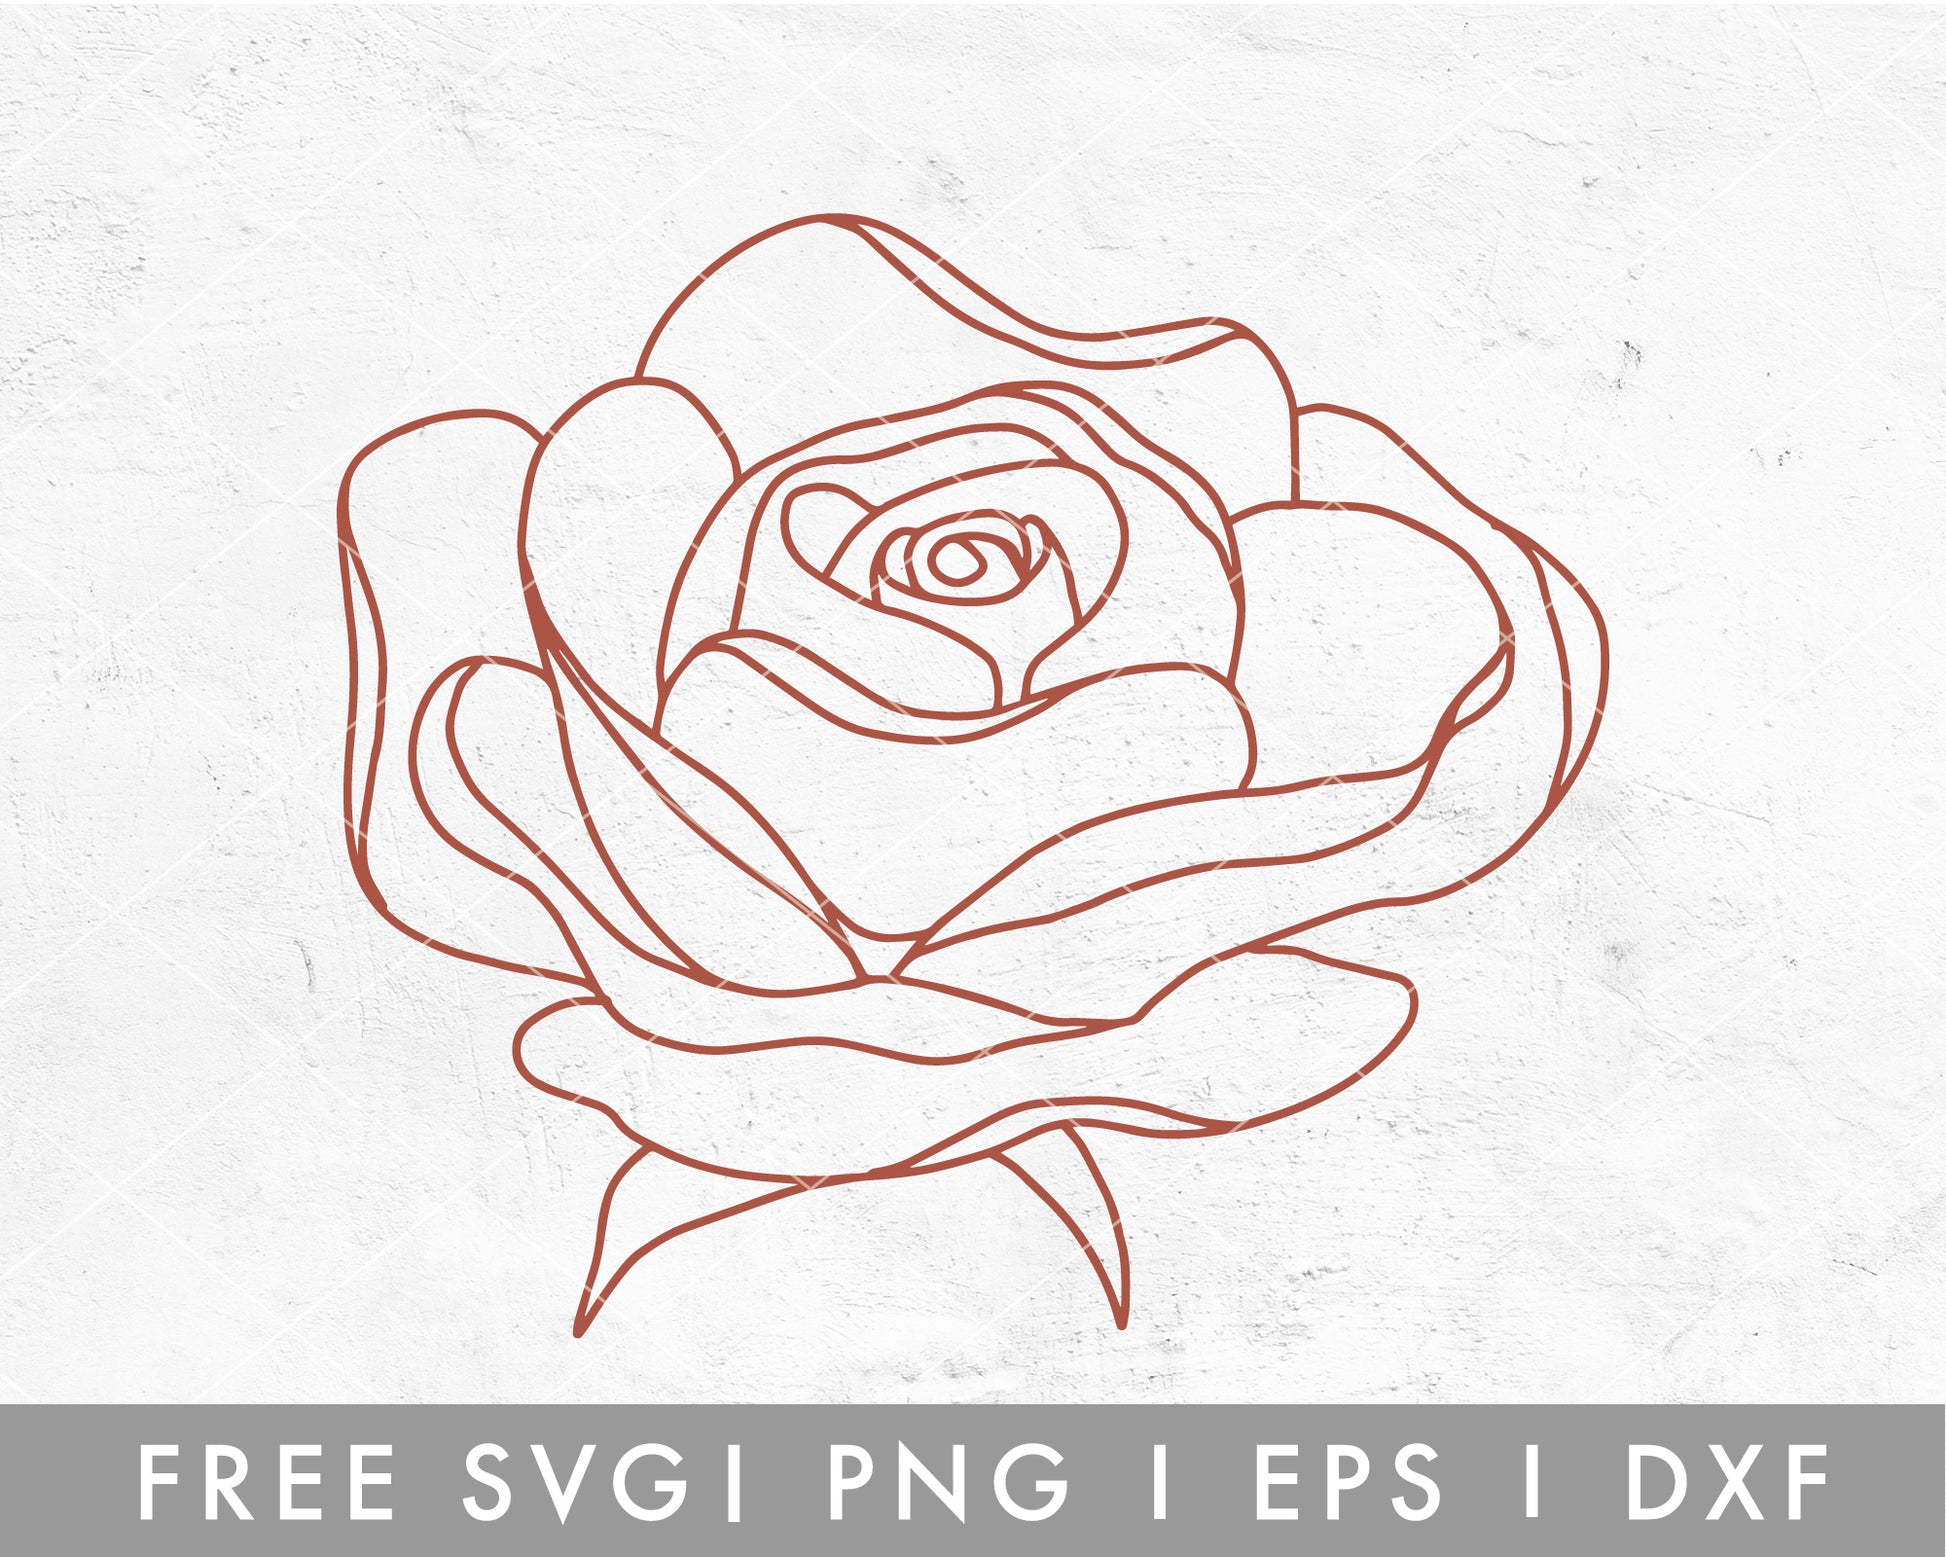 Silhouette Rose SVG Designs